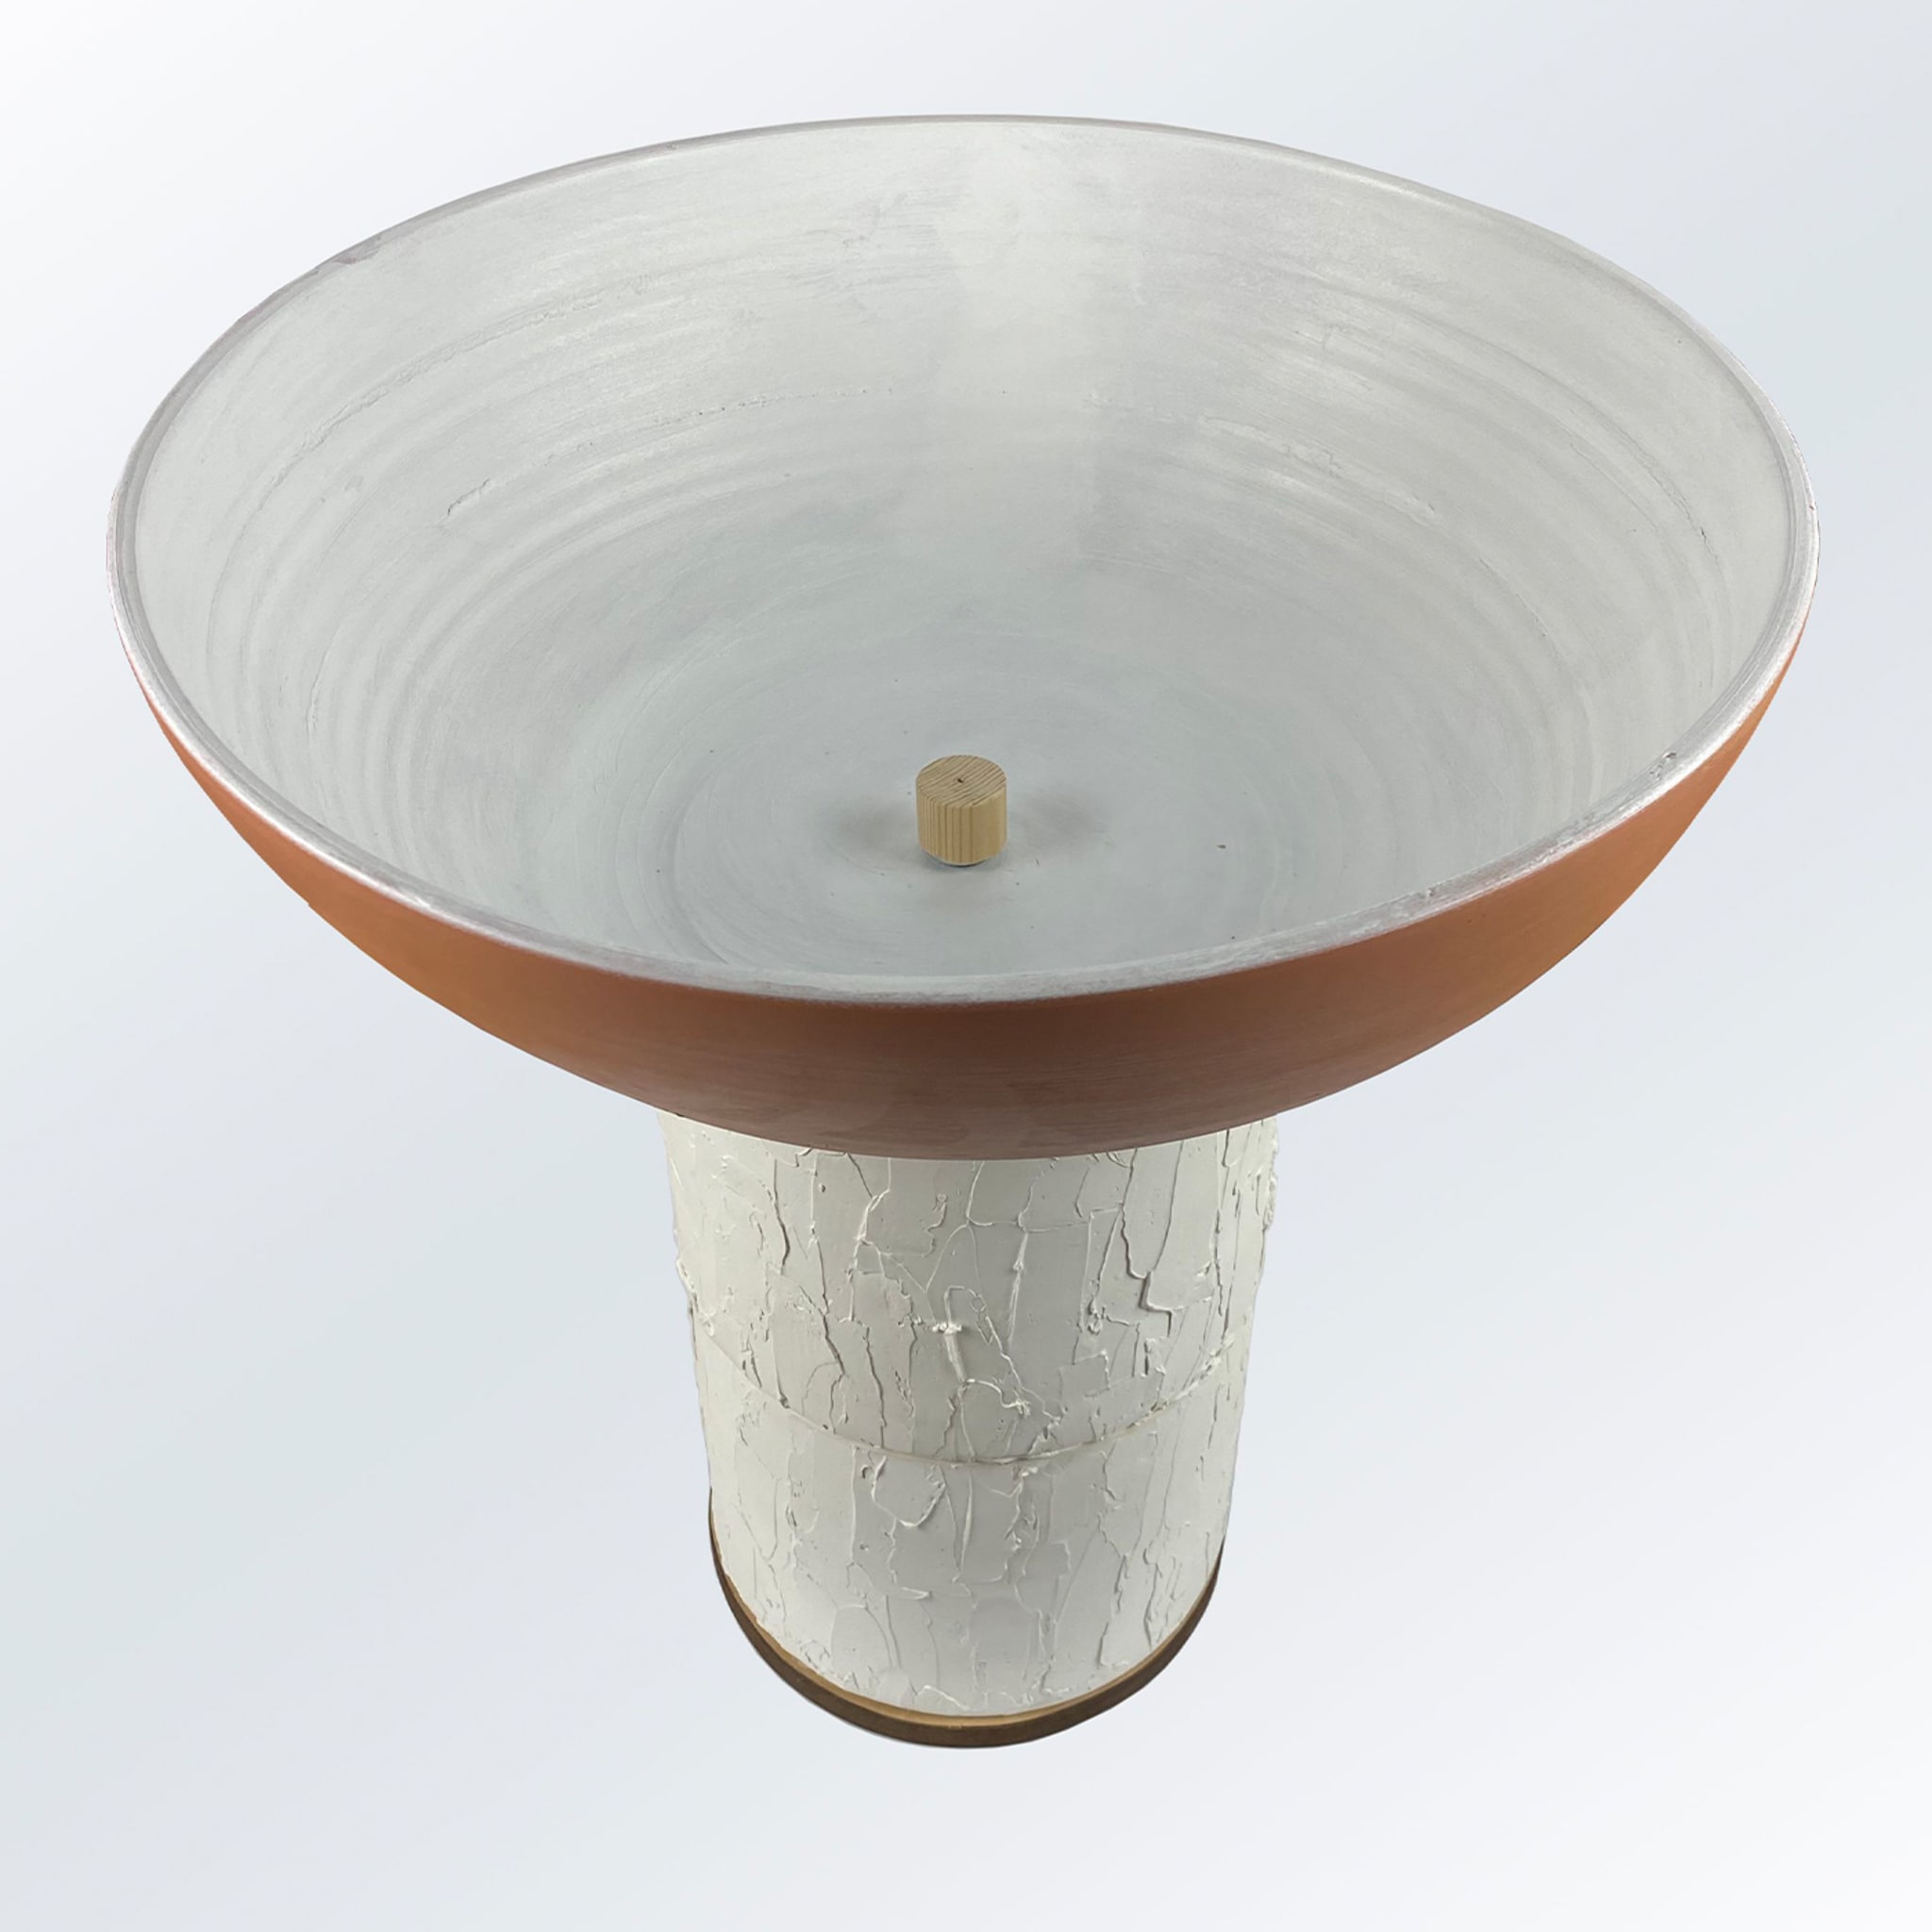 Forme Vase 1 by Meccani Studio - Alternative view 1